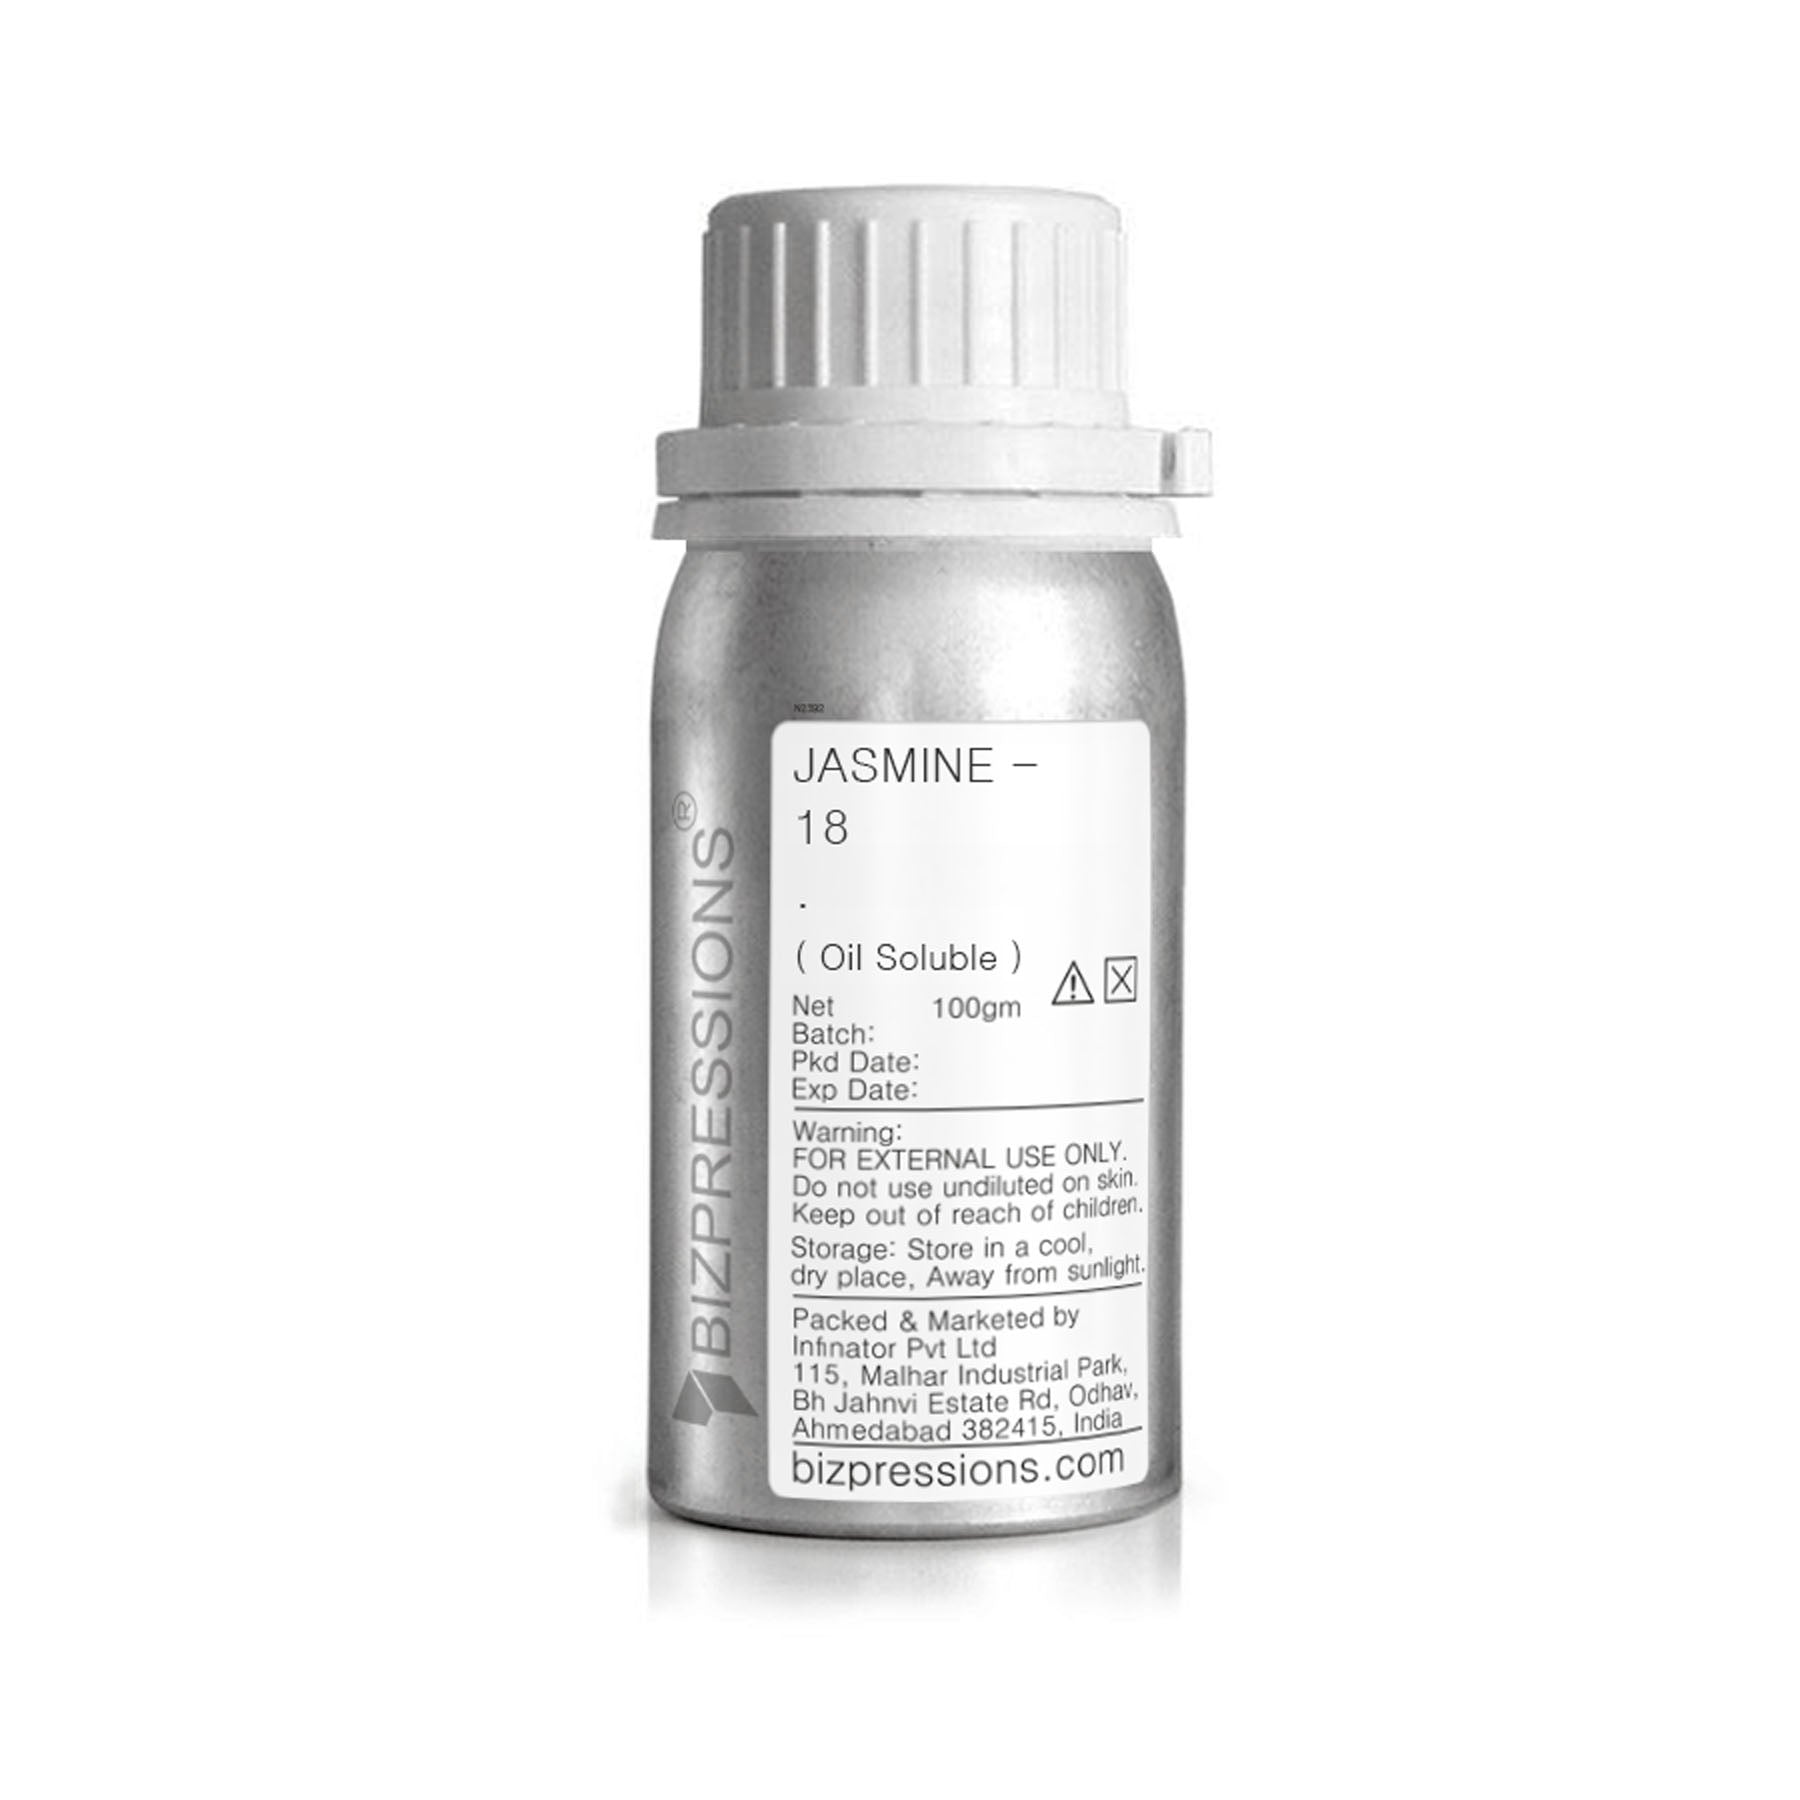 JASMINE - 18 - Fragrance ( Oil Soluble ) - 100 gm